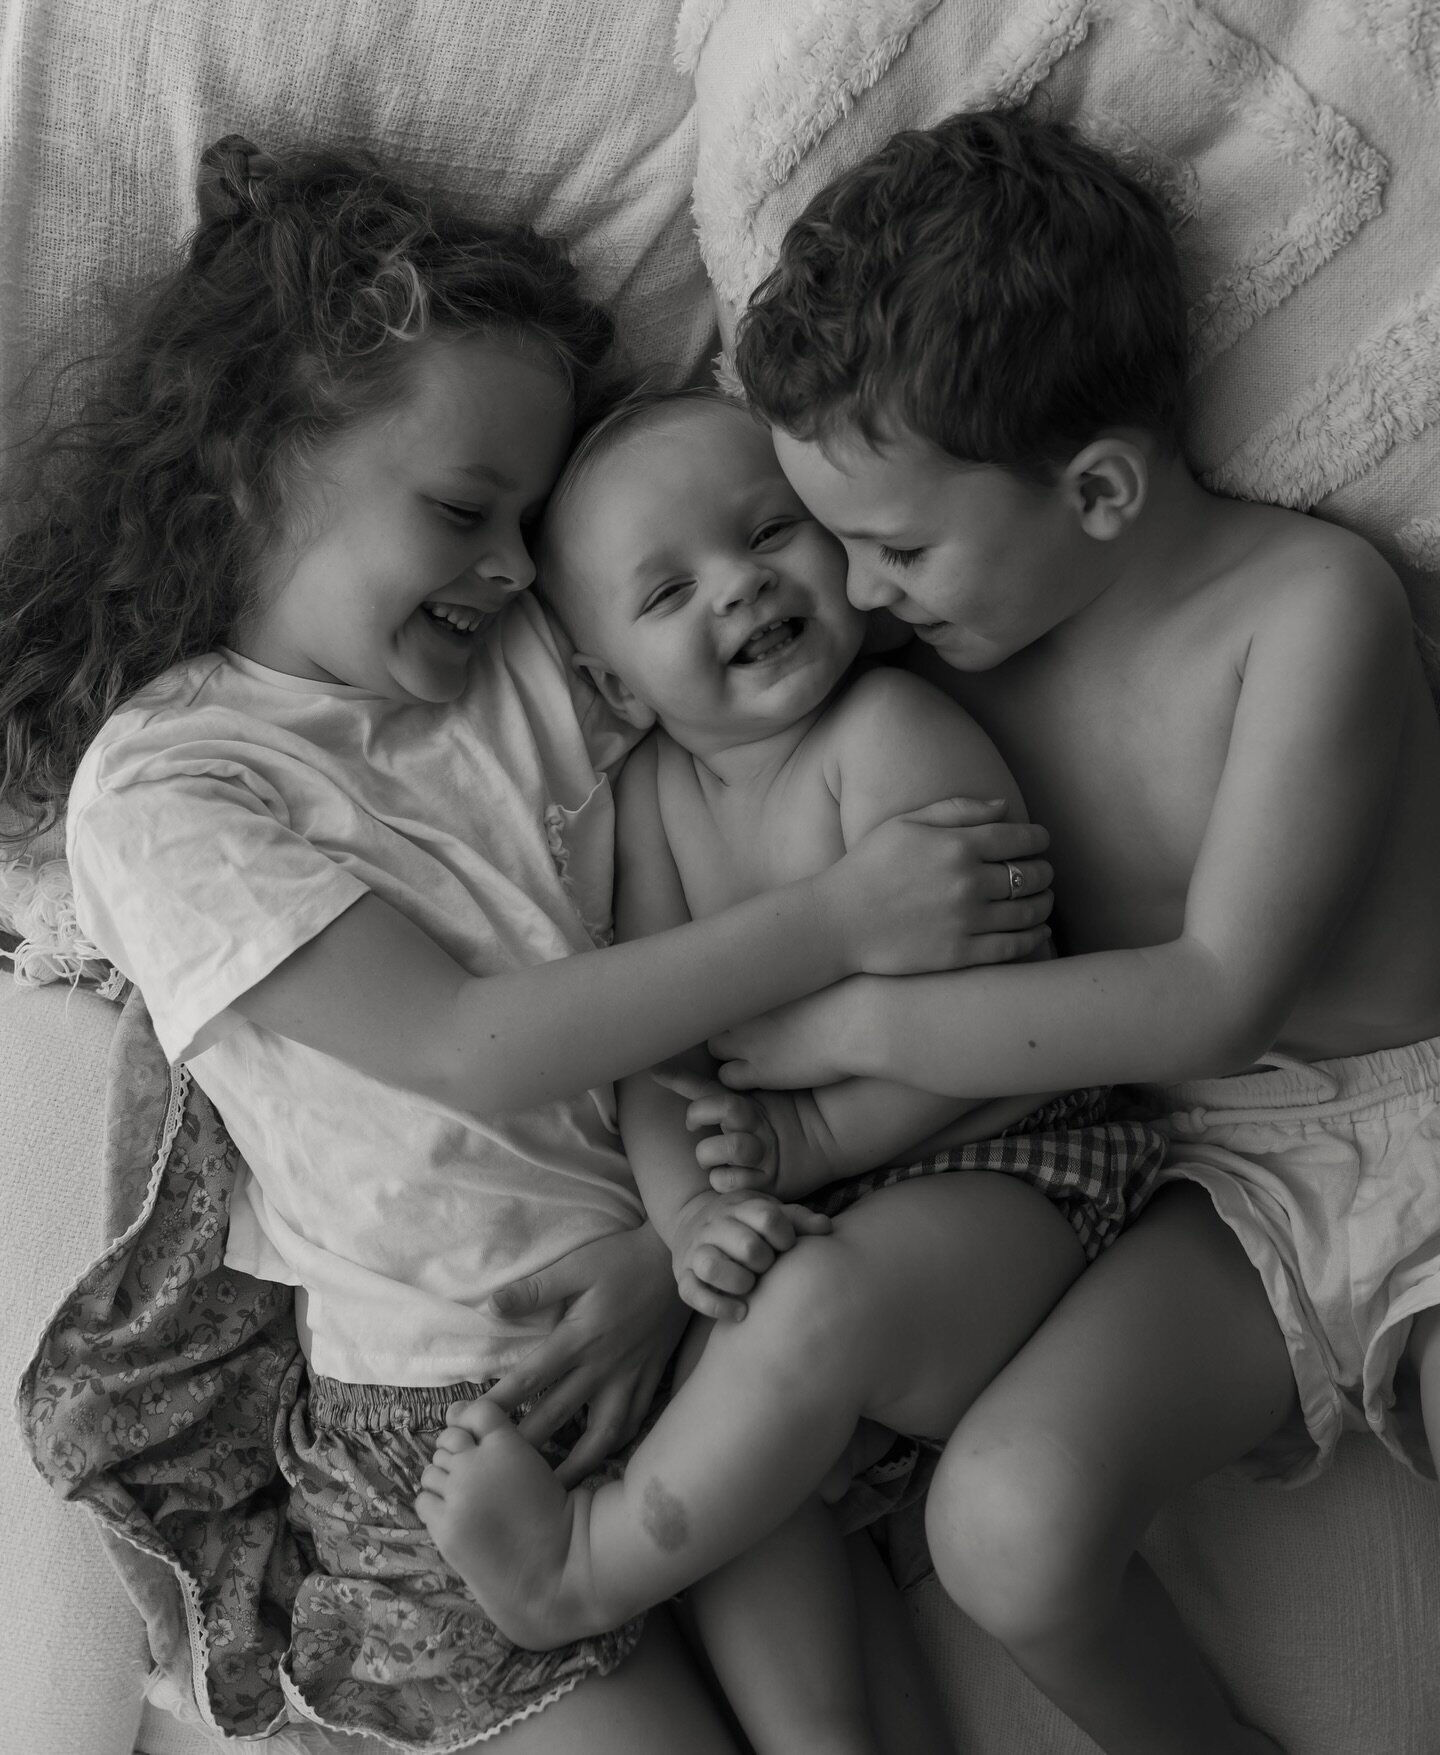 Three giggly kids! 🤎